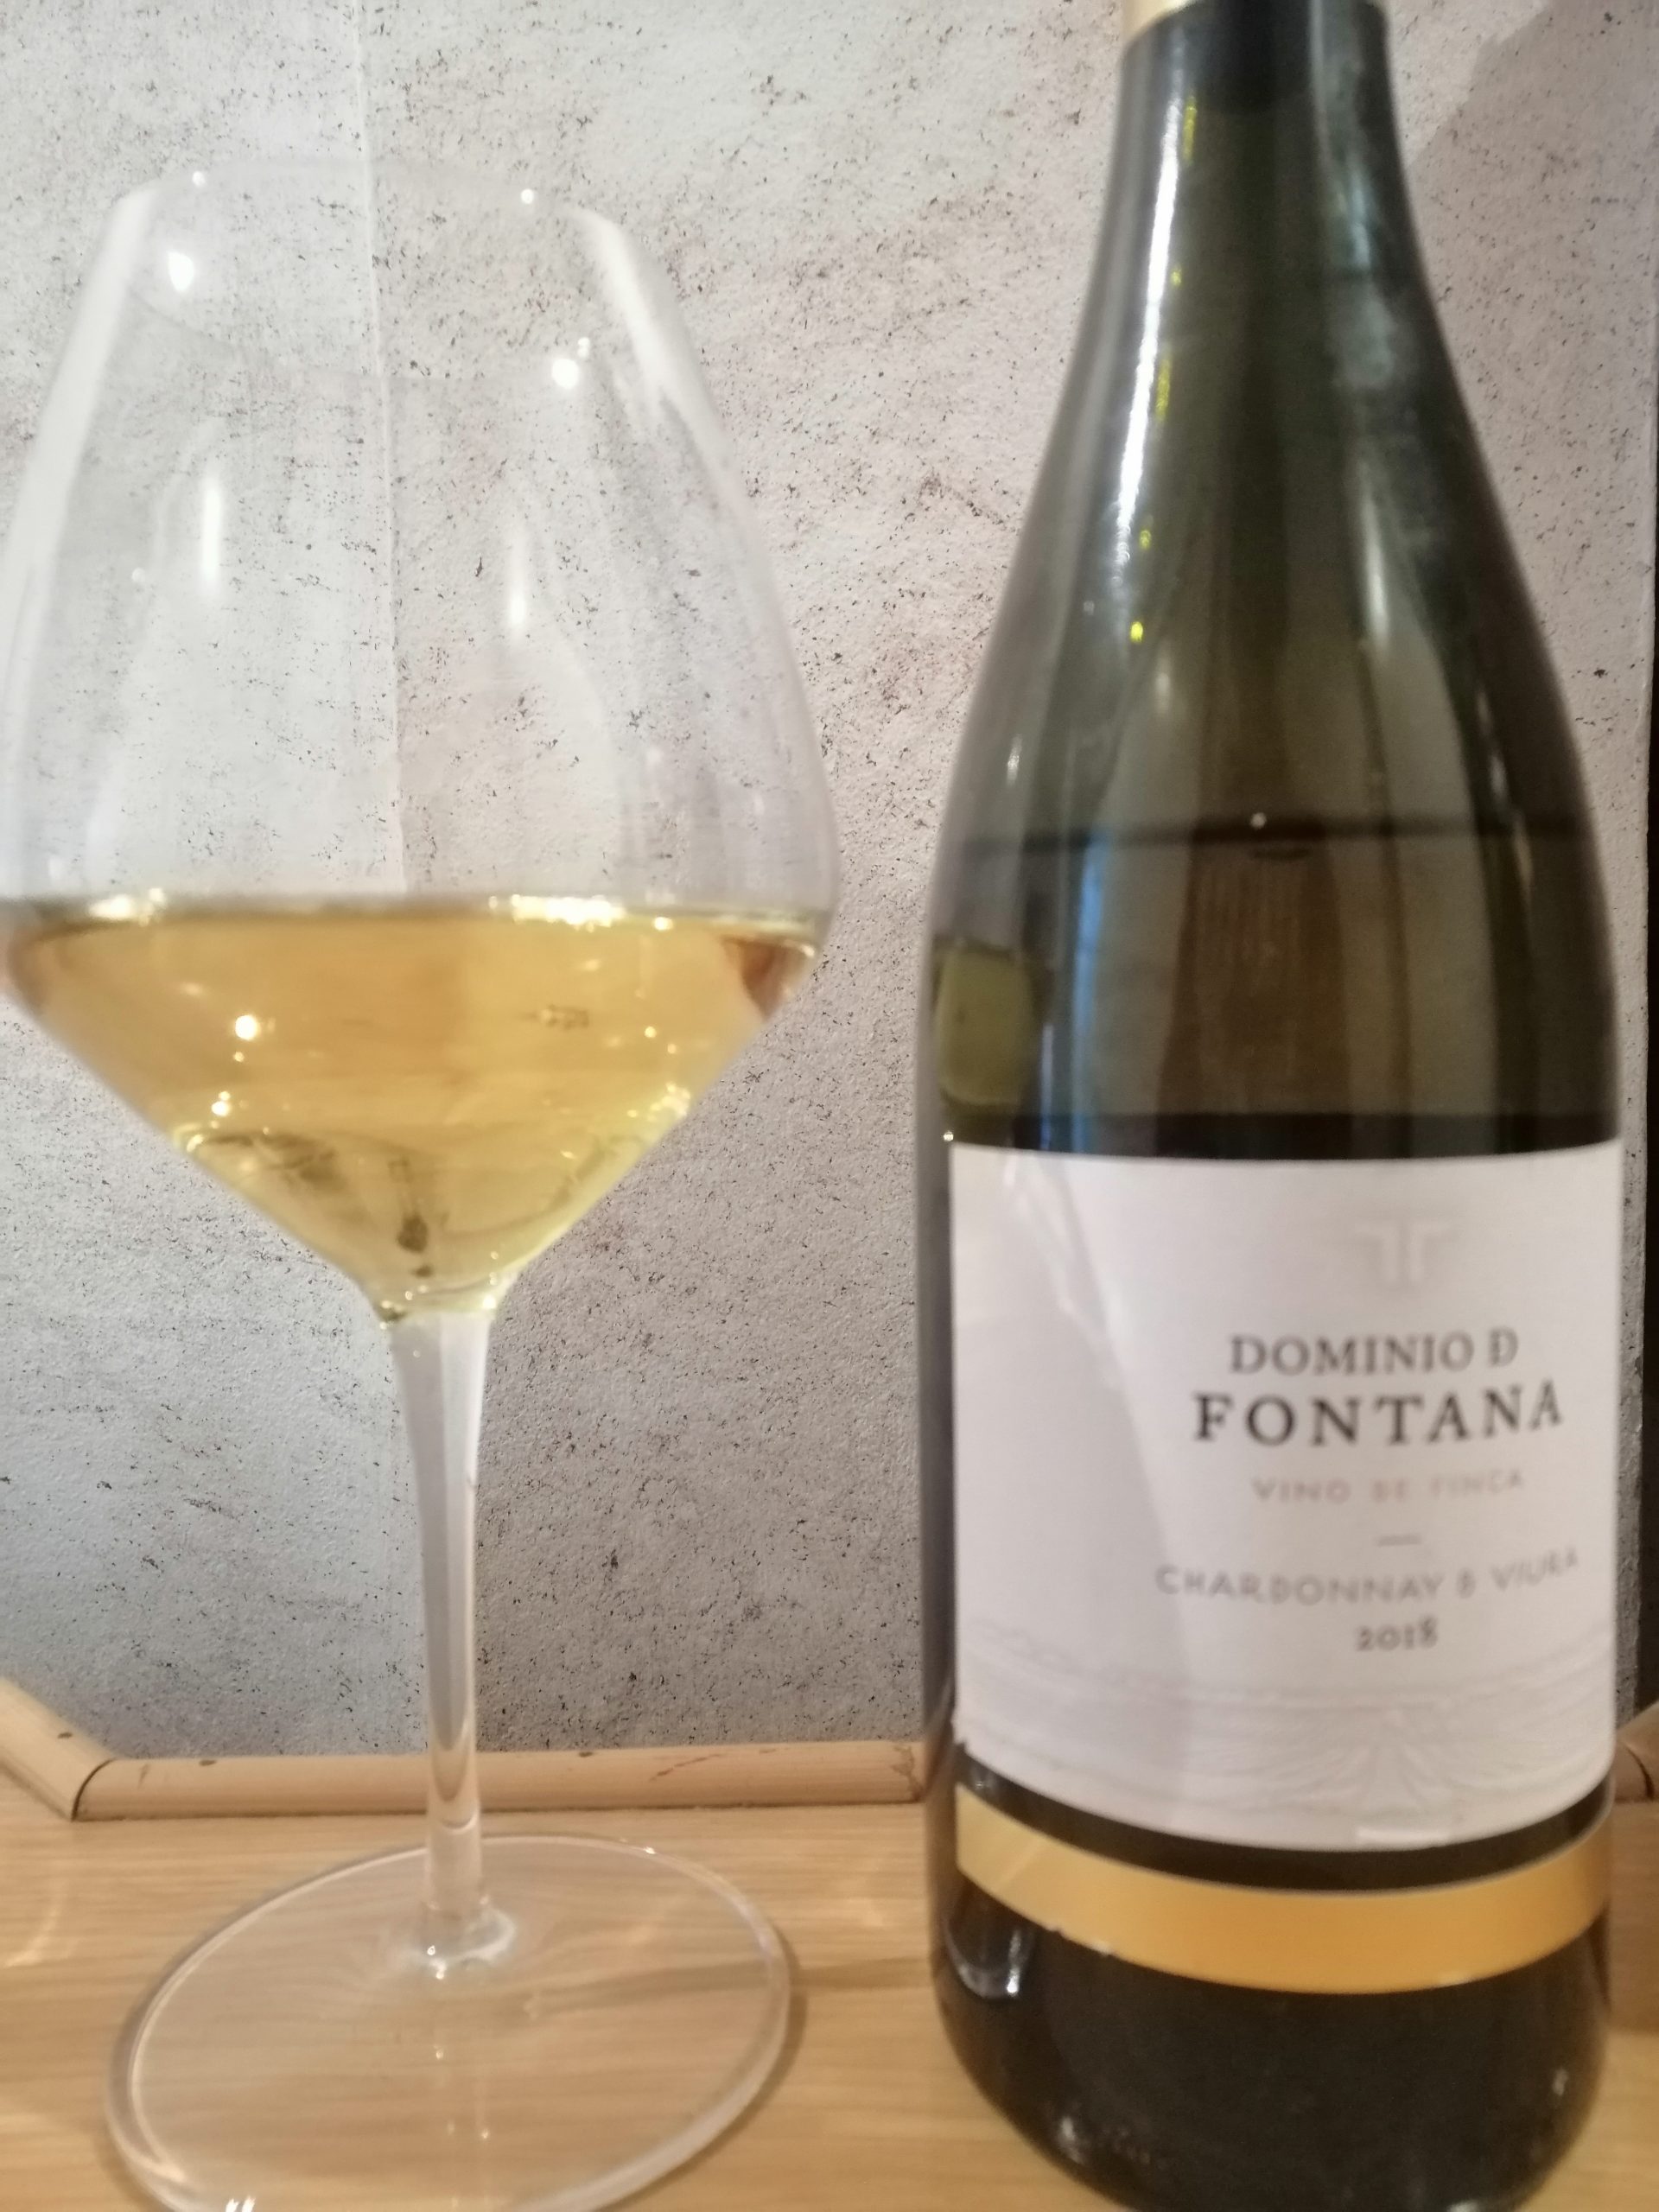 En este momento estás viendo Dominio de Fontana Chardonnay & Viura